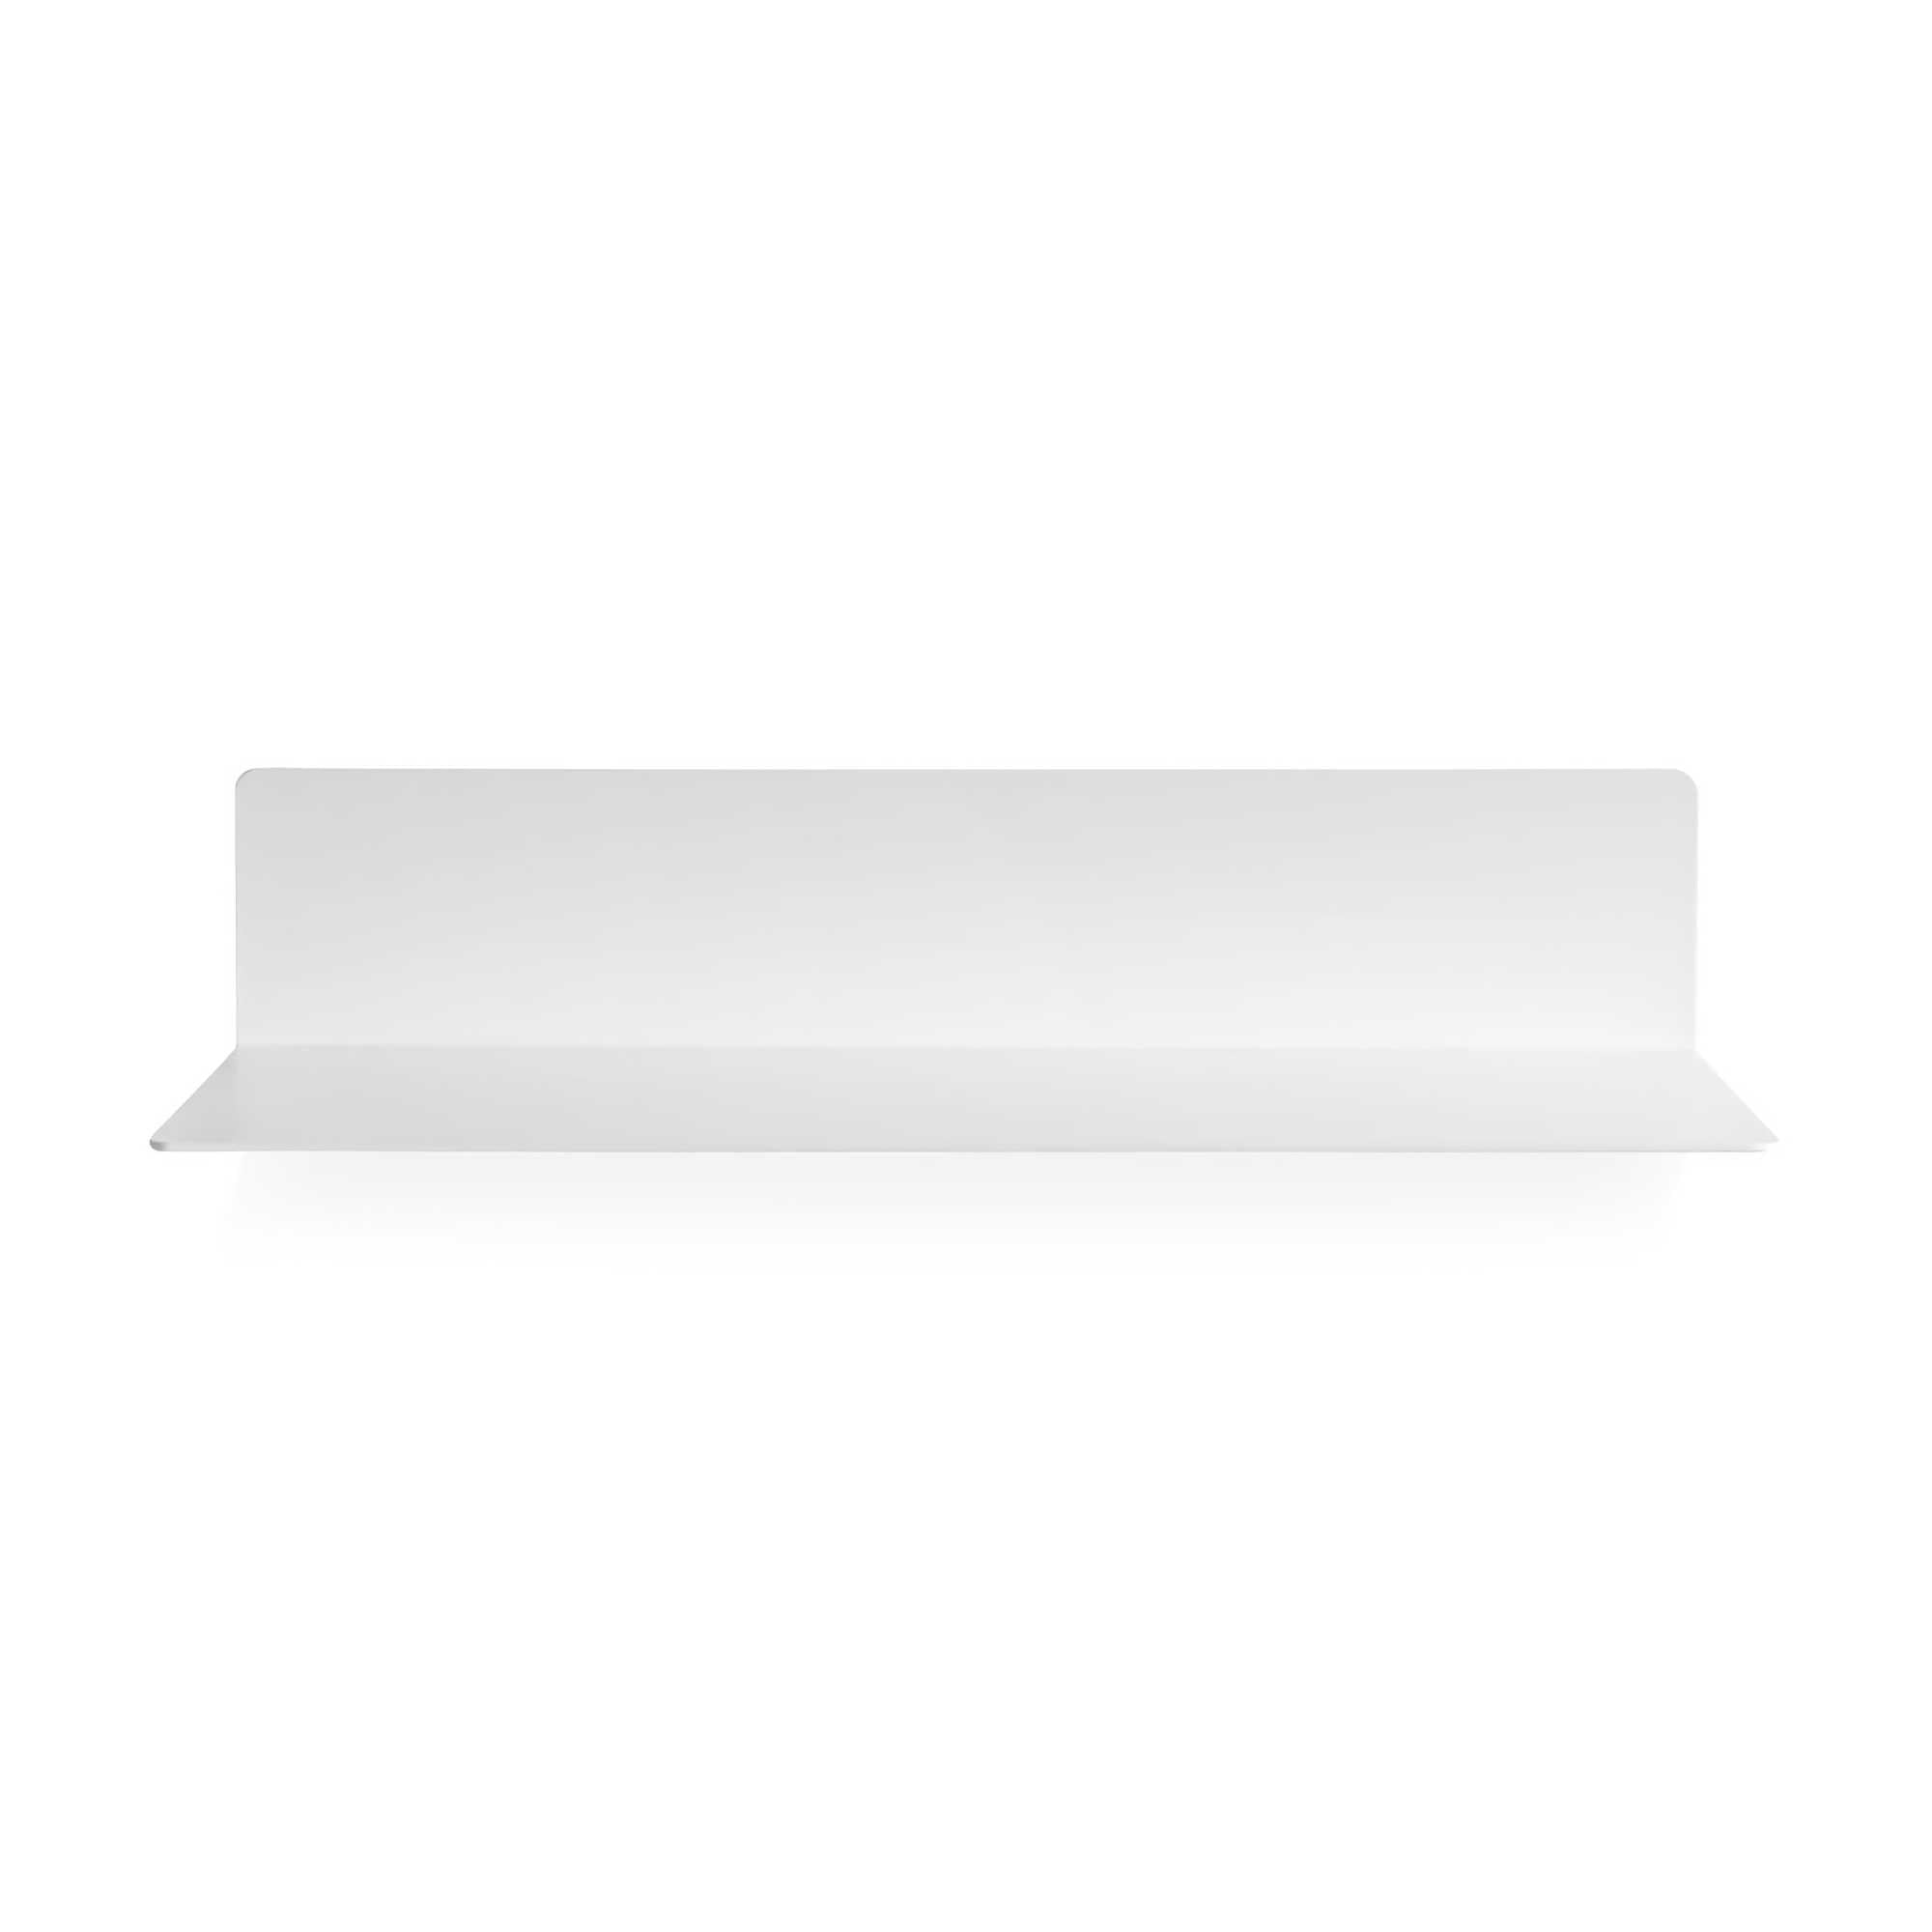 Blu Dot Welf Wall Shelf Small, White (W60.5 x D20 x H11.5 cm)